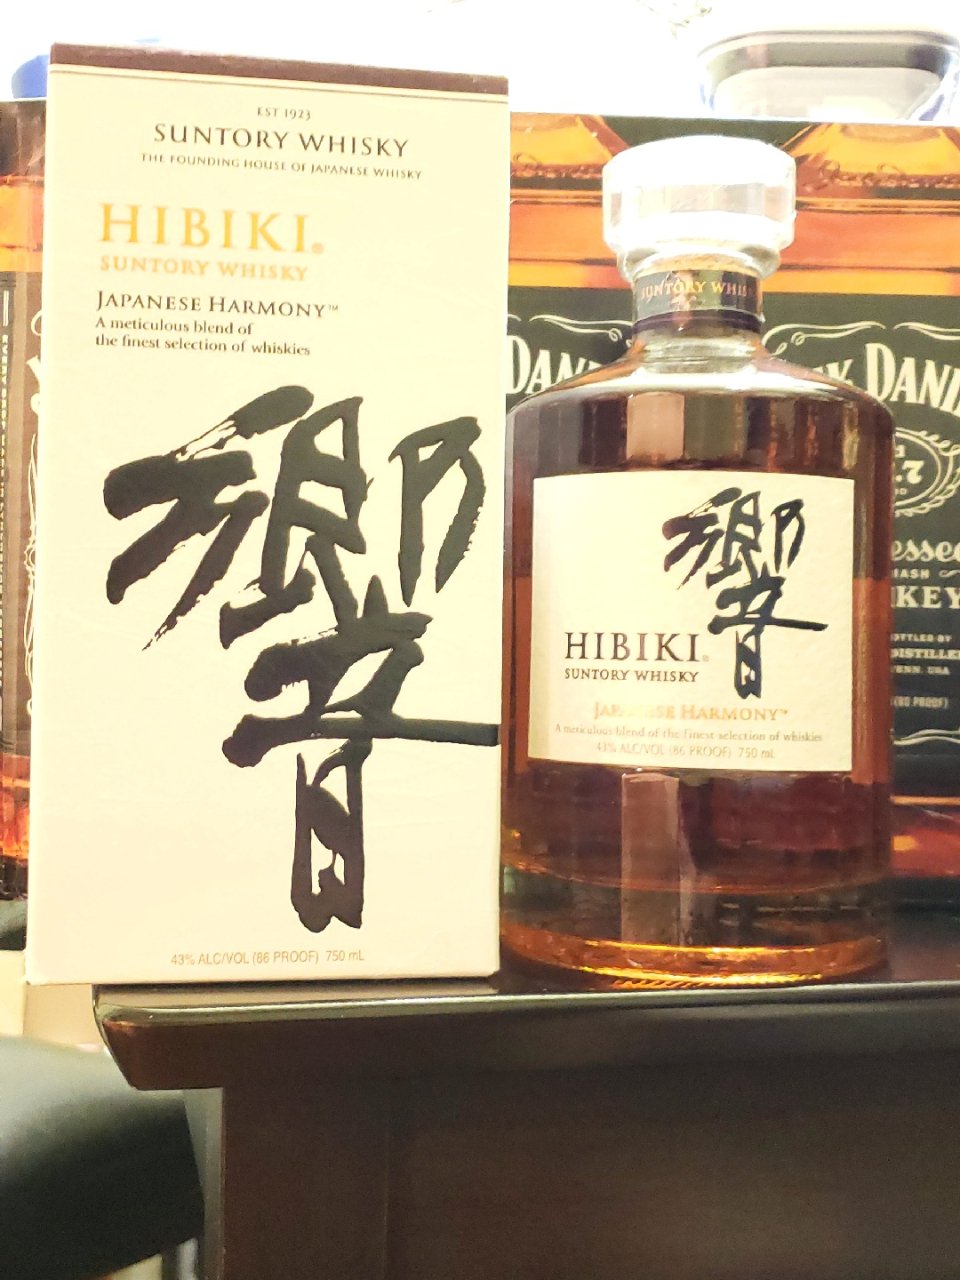 hibiki,costco推荐,日本威士忌